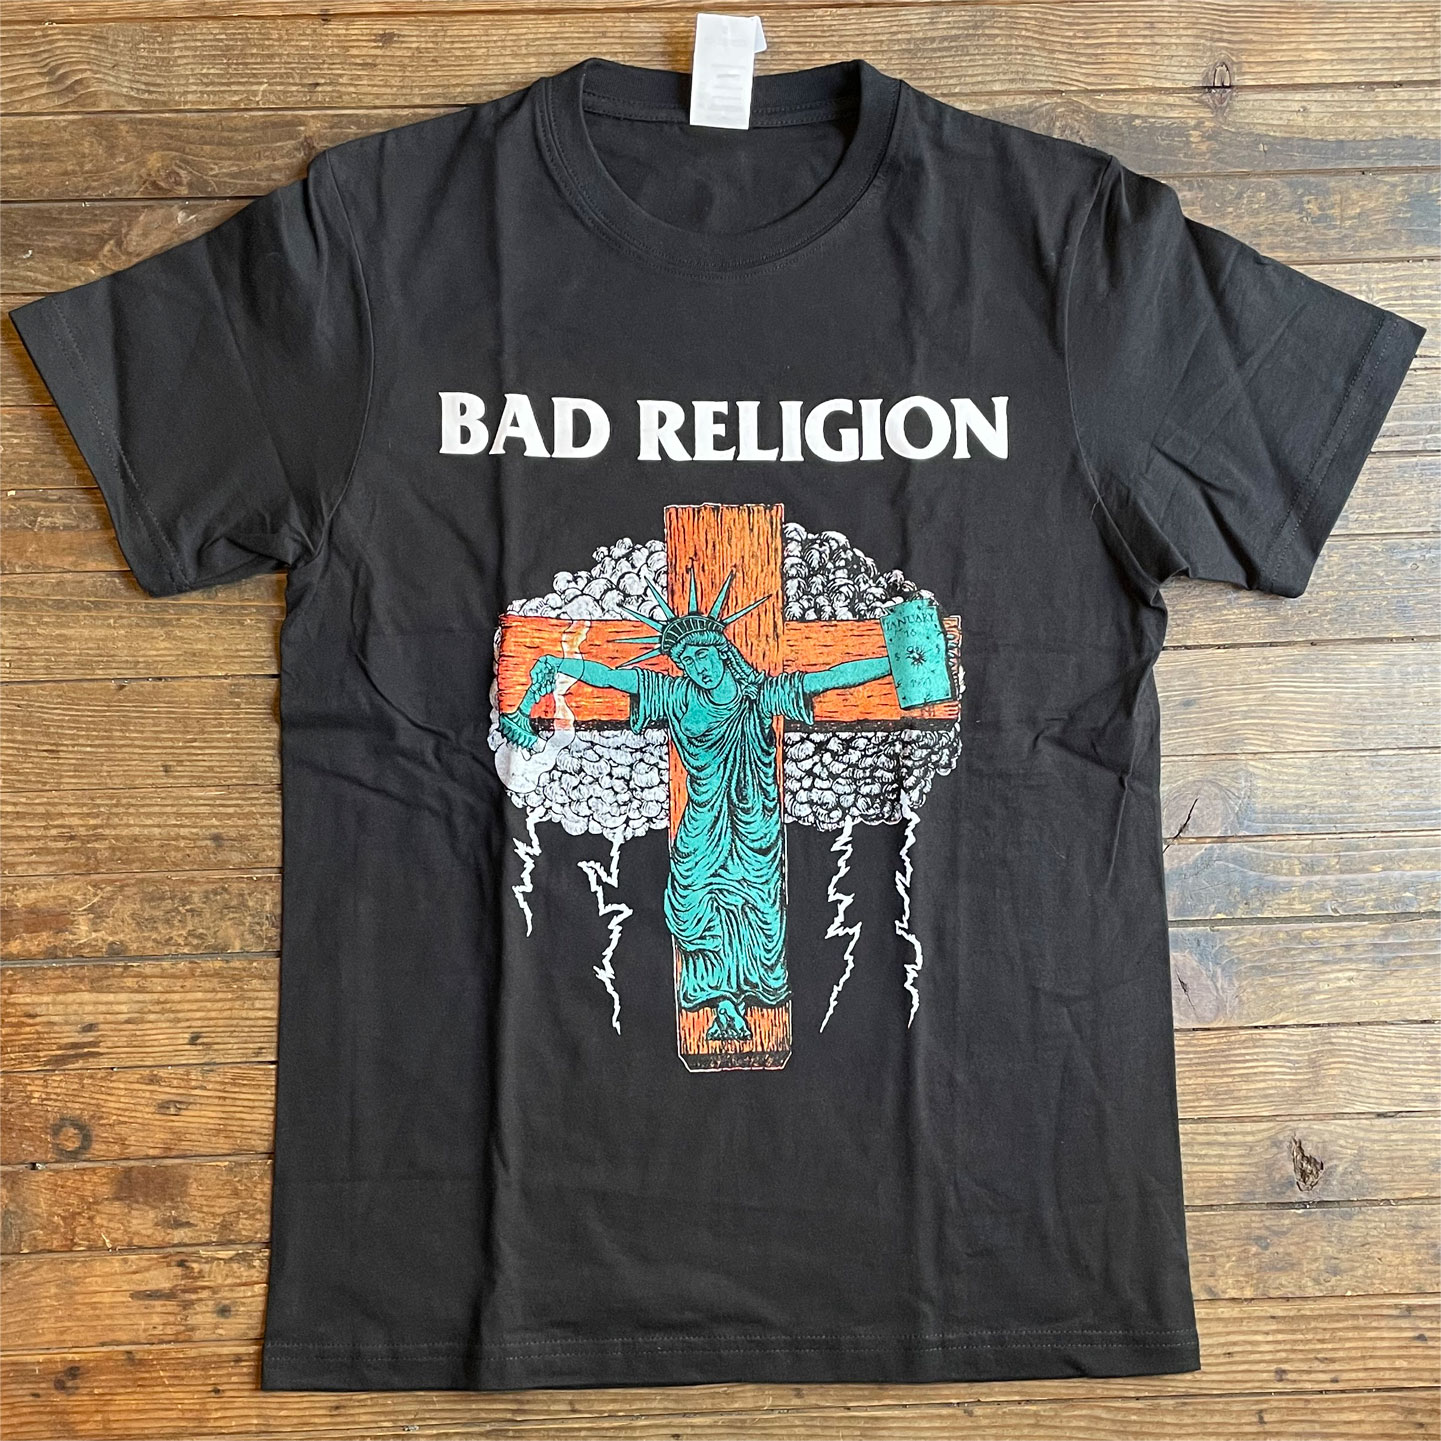 BAD RELIGION Tシャツ TOUR